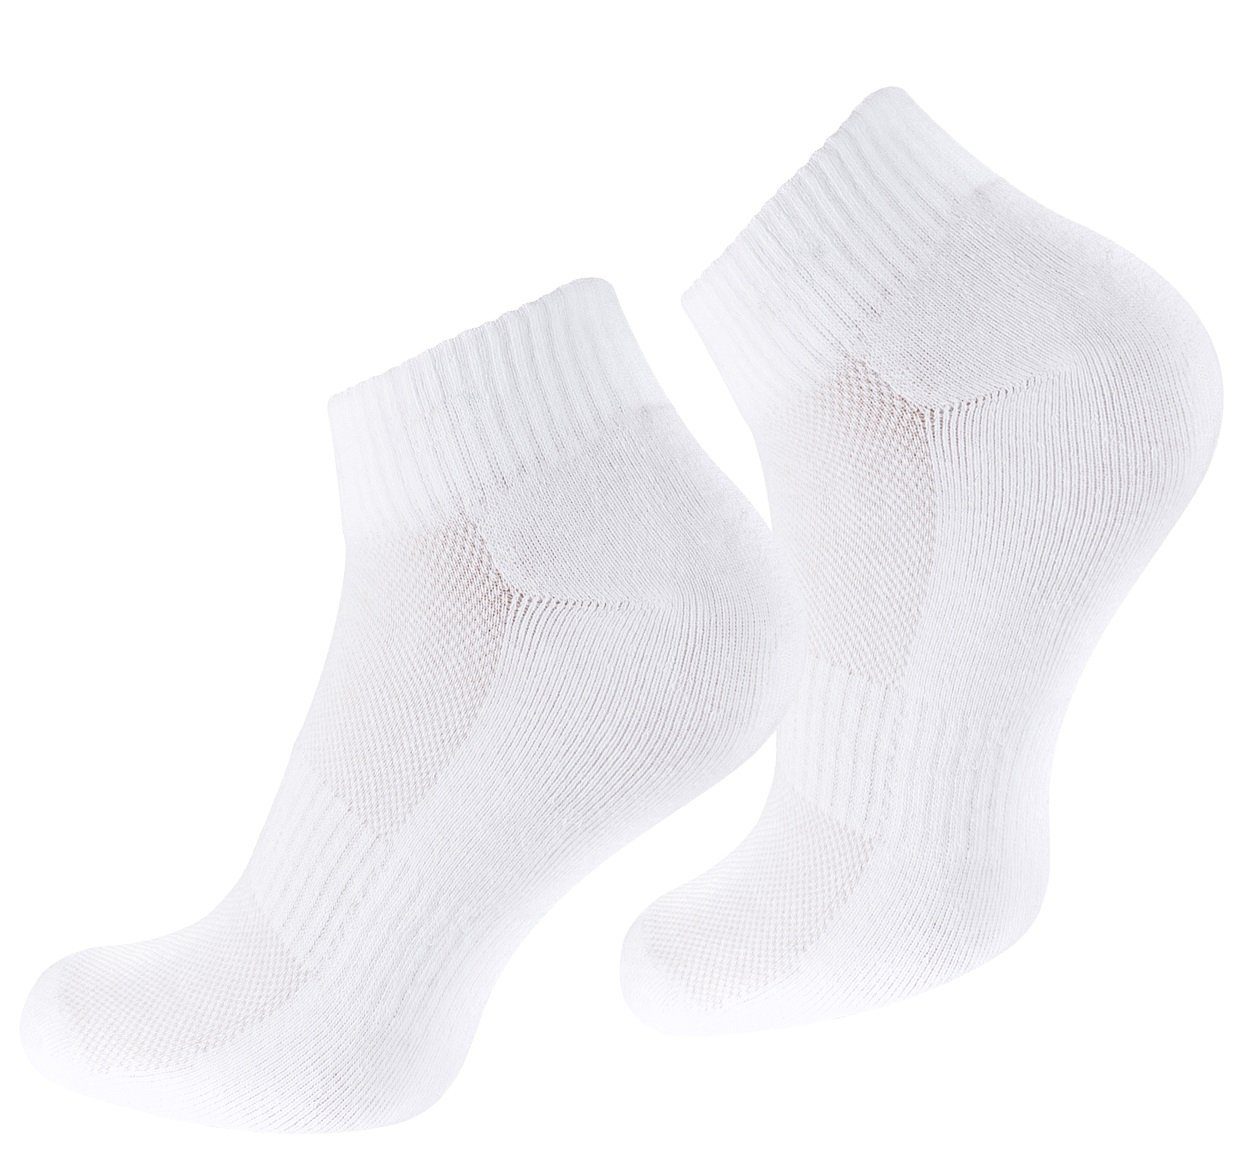 und Sportsocken Weiß 6 Paar mit Quarter Frotteesole Soul® Mesh-Strick Socken-Sportsocken Stark